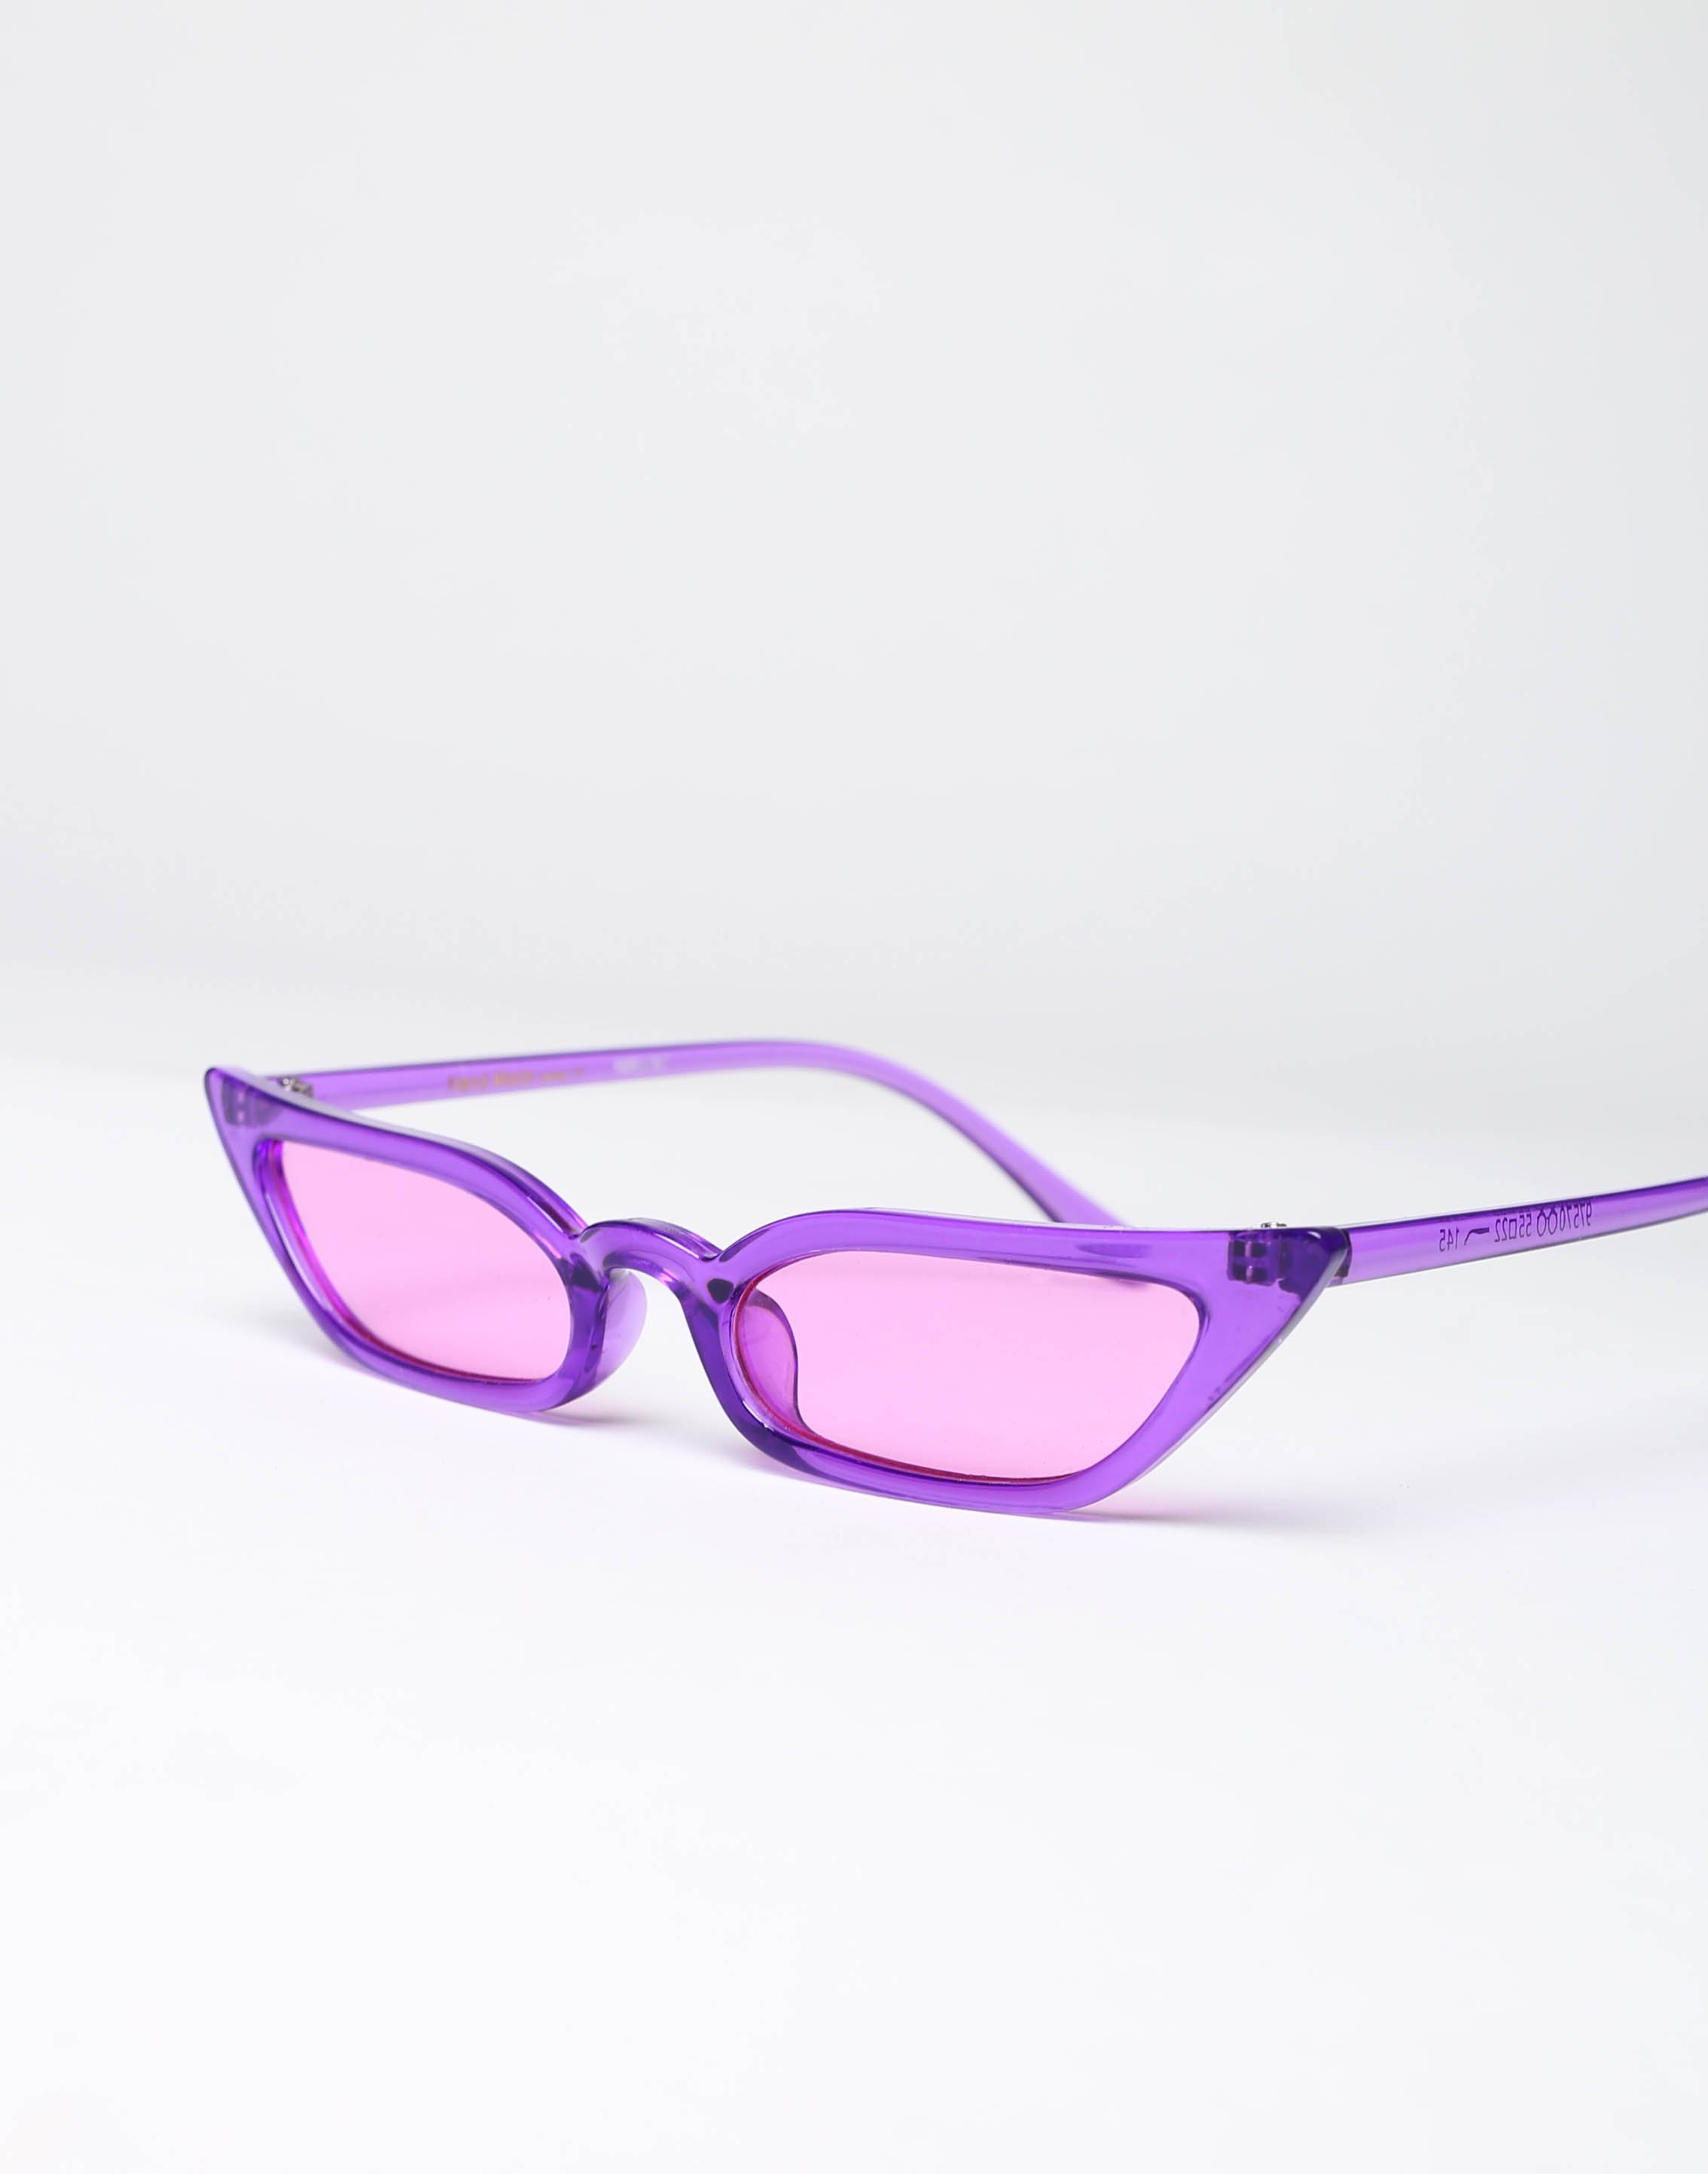 HIDDEN CULT Siren Purple Sunglasses